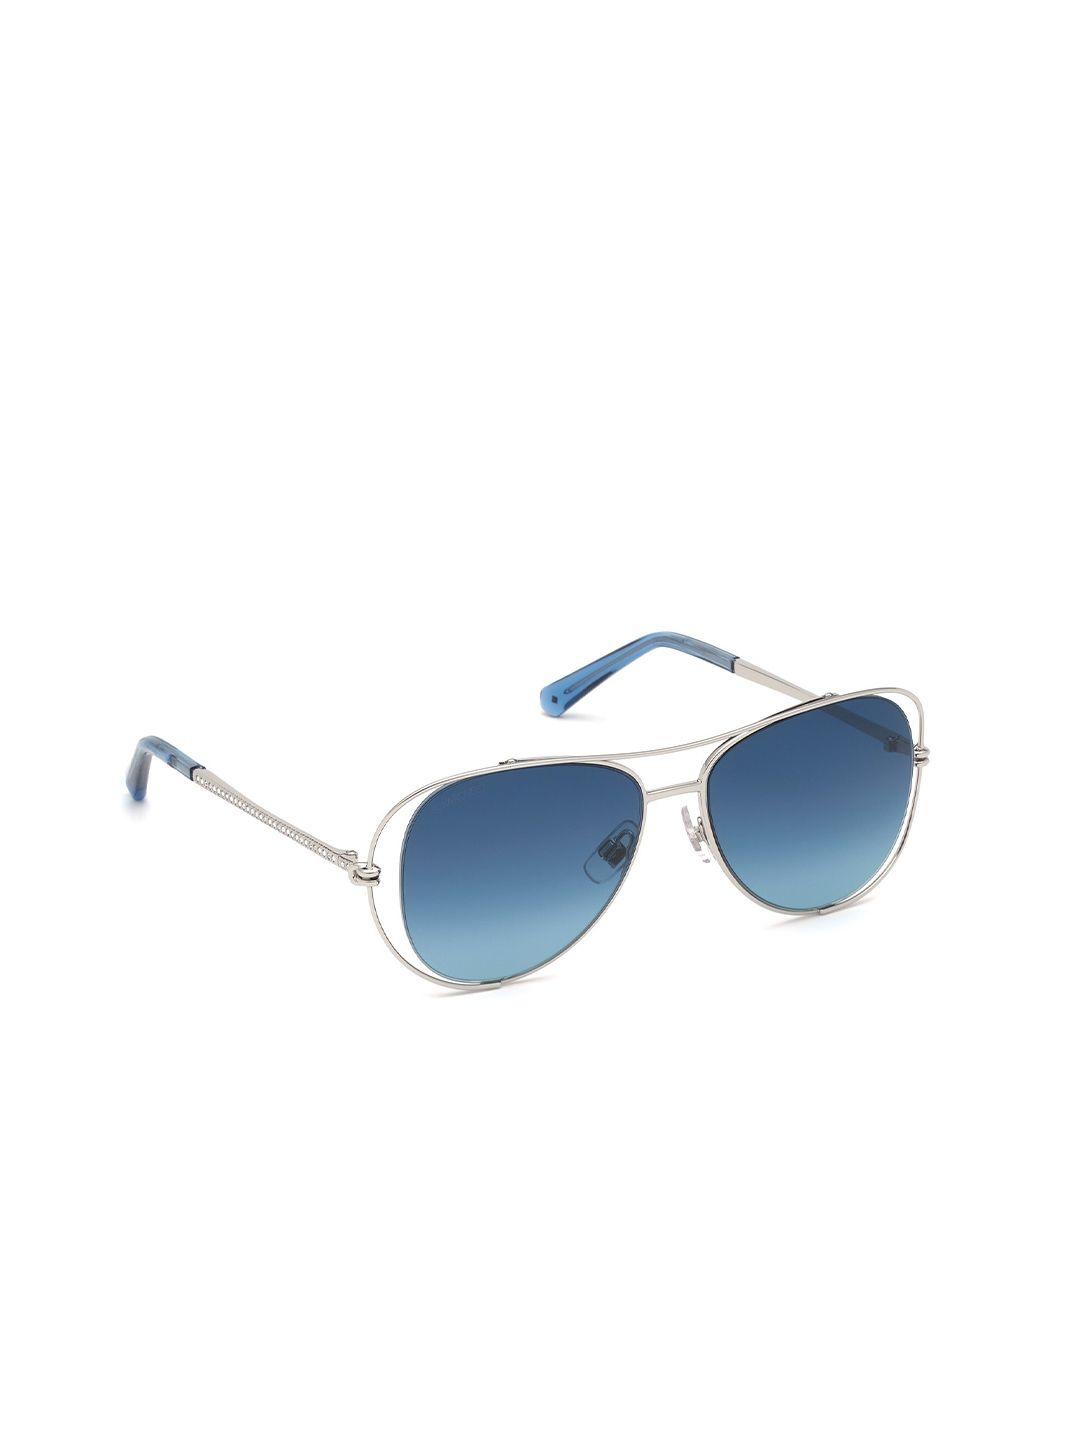 swarovski-women-blue-sunglasses-women-sunglasses